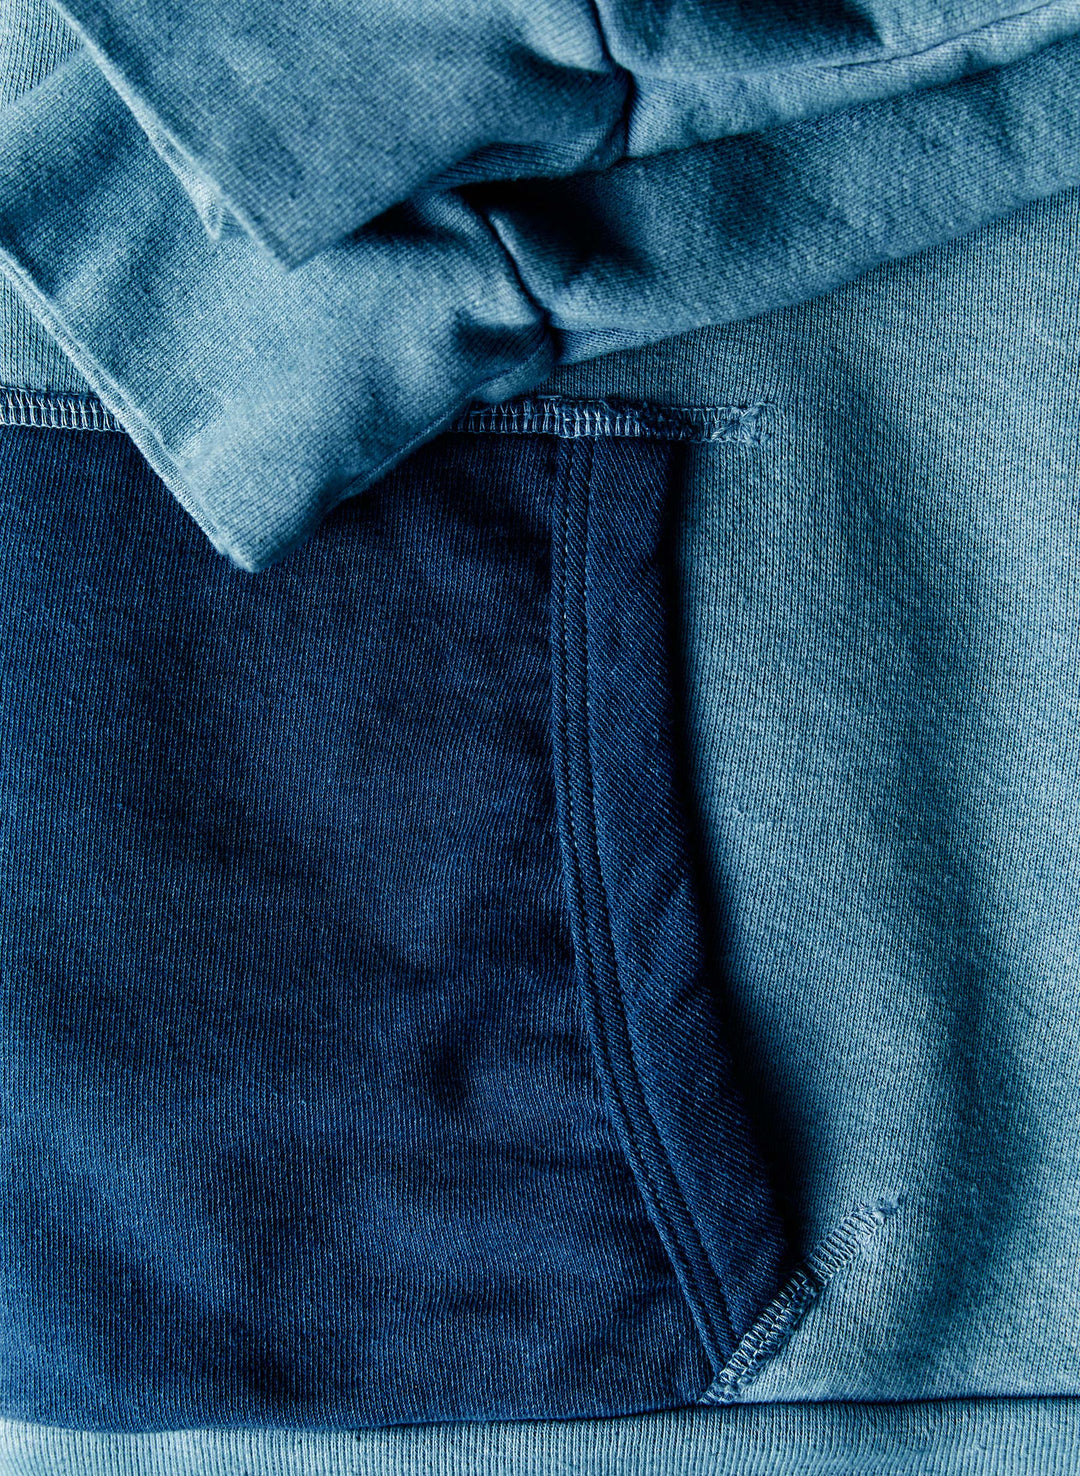 Outerwear, Textile, Sleeve, Grey, Collar, Aqua, Material property, Pattern, Electric blue, Denim